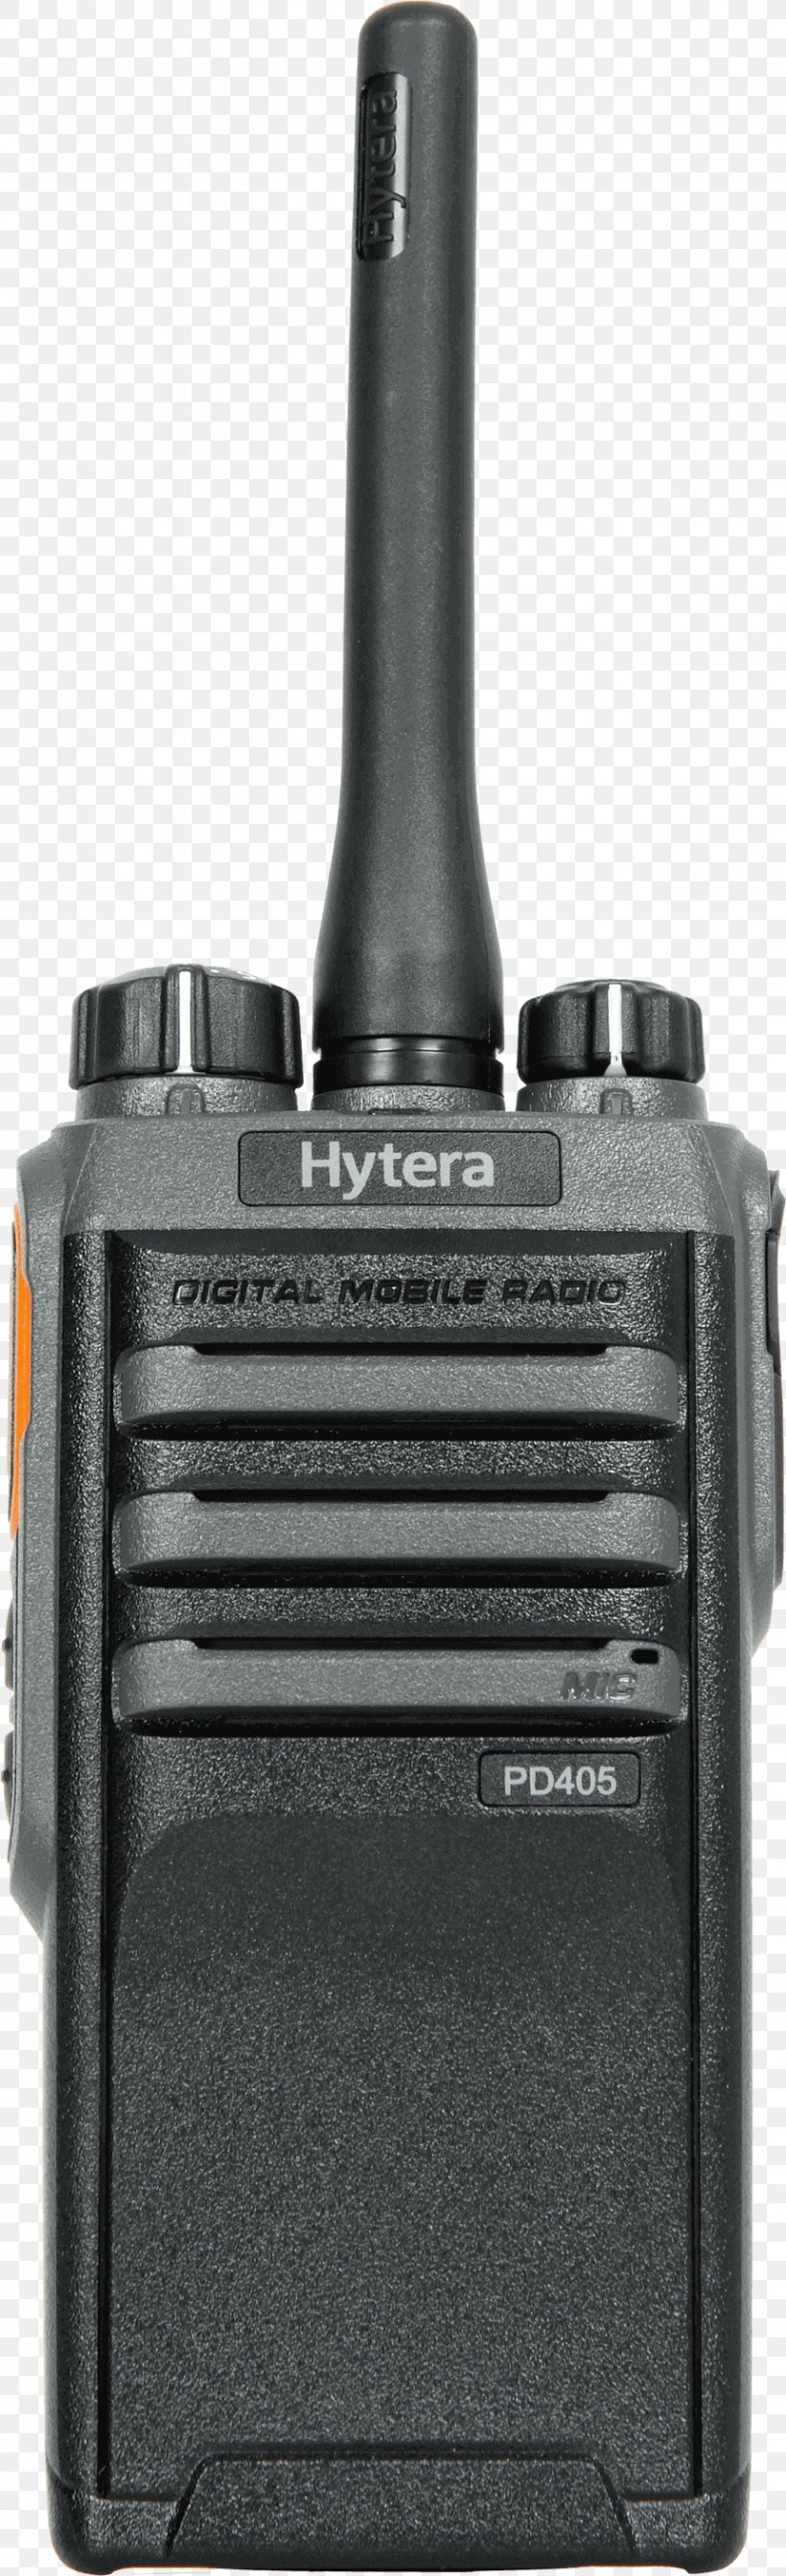 Two-way Radio Digital Mobile Radio Hytera Walkie-talkie, PNG, 860x2821px, Twoway Radio, Digital Mobile Radio, Electronic Device, Hytera, Icom Incorporated Download Free